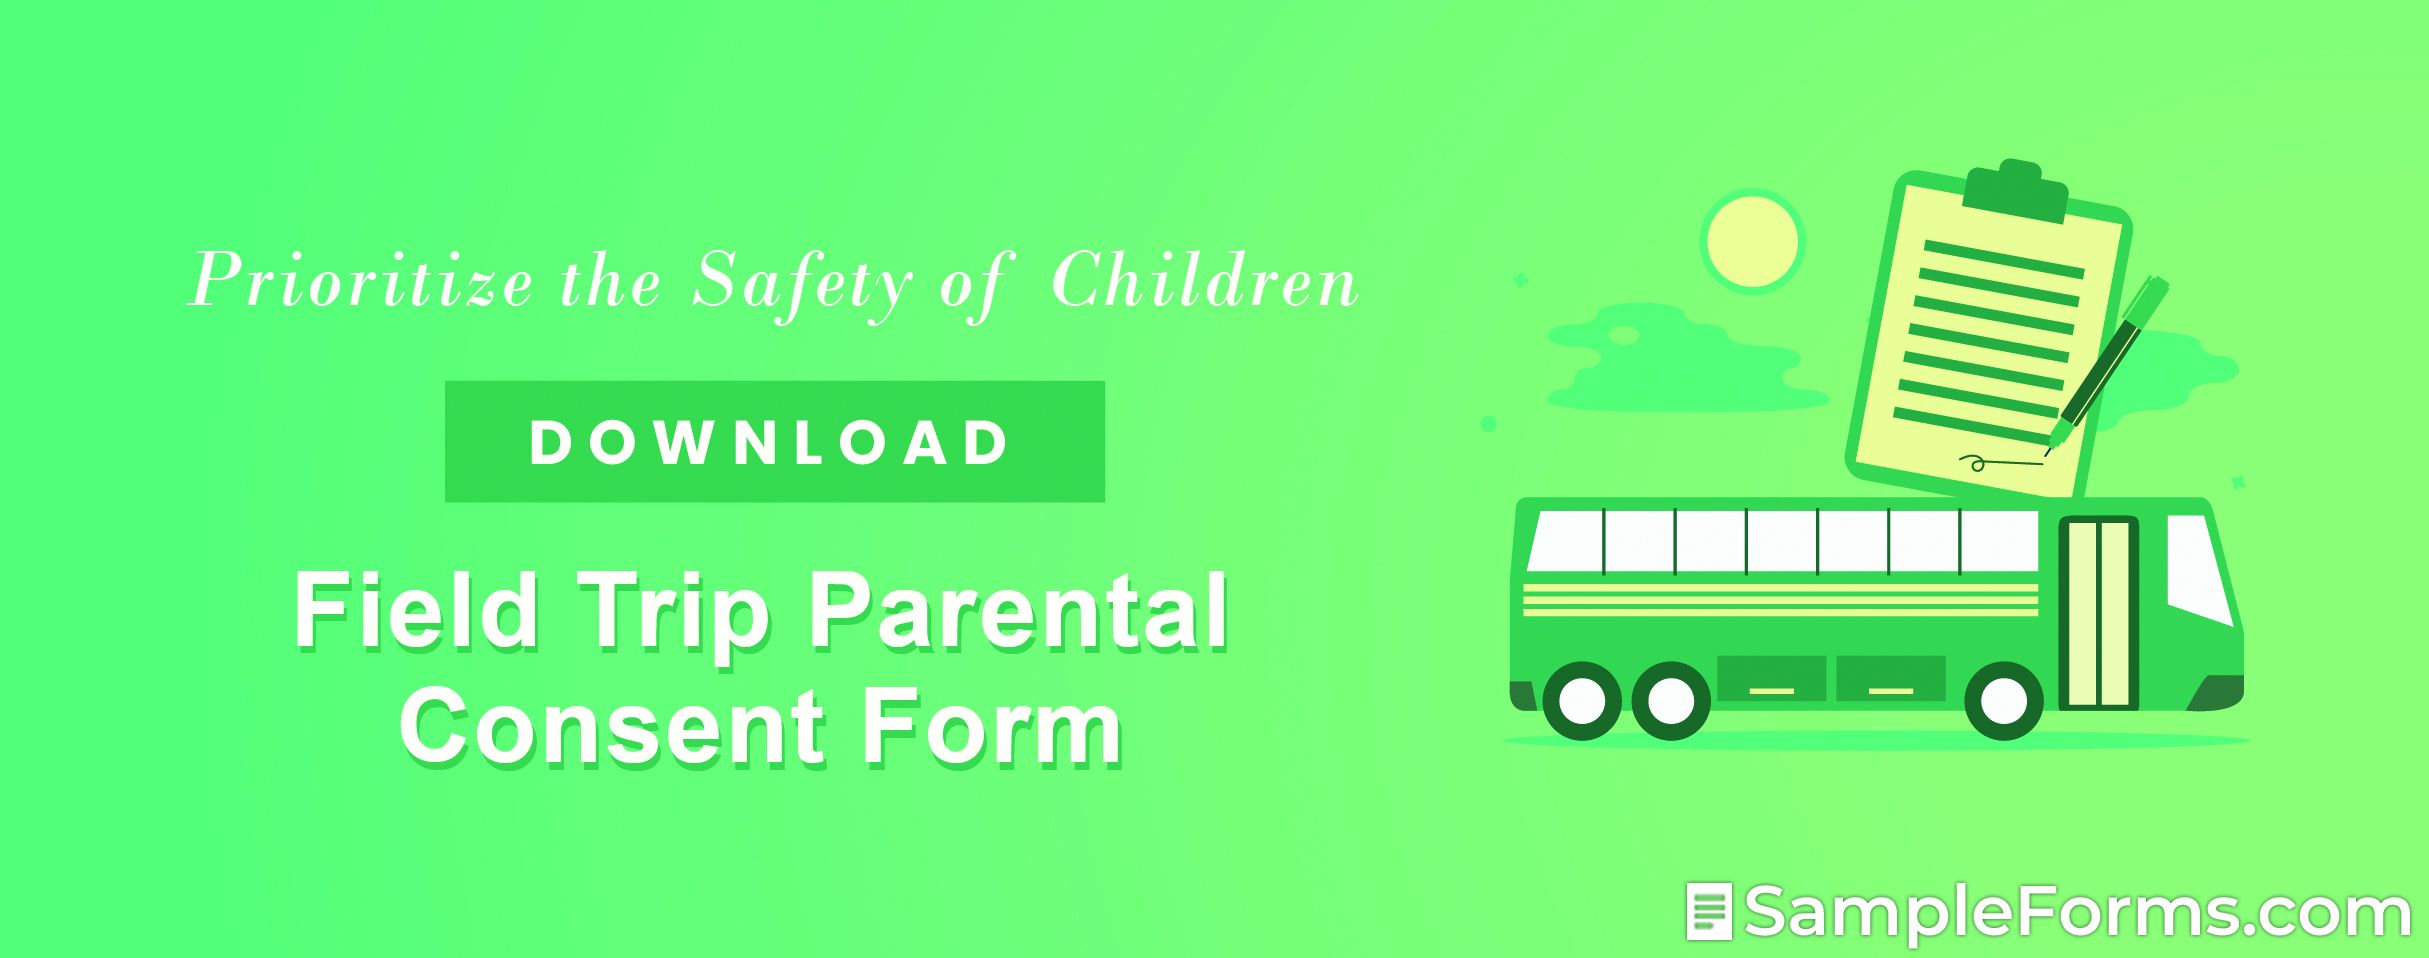 Field Trip Parental Consent Form1